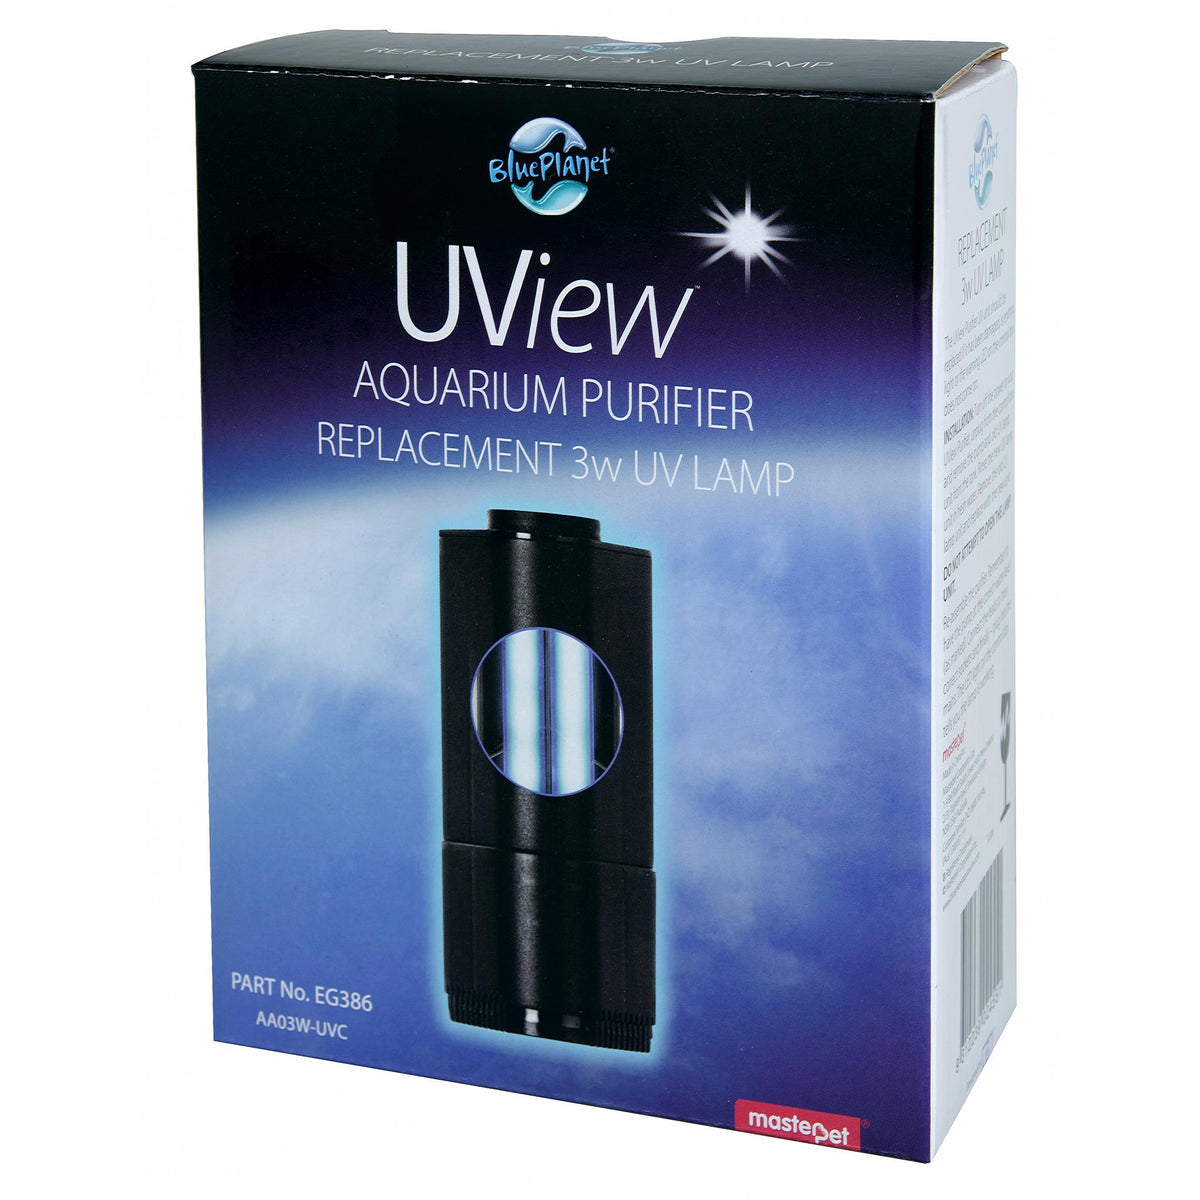 Blue Planet UView Aquarium Purifier Replacement 3w UV Lamp